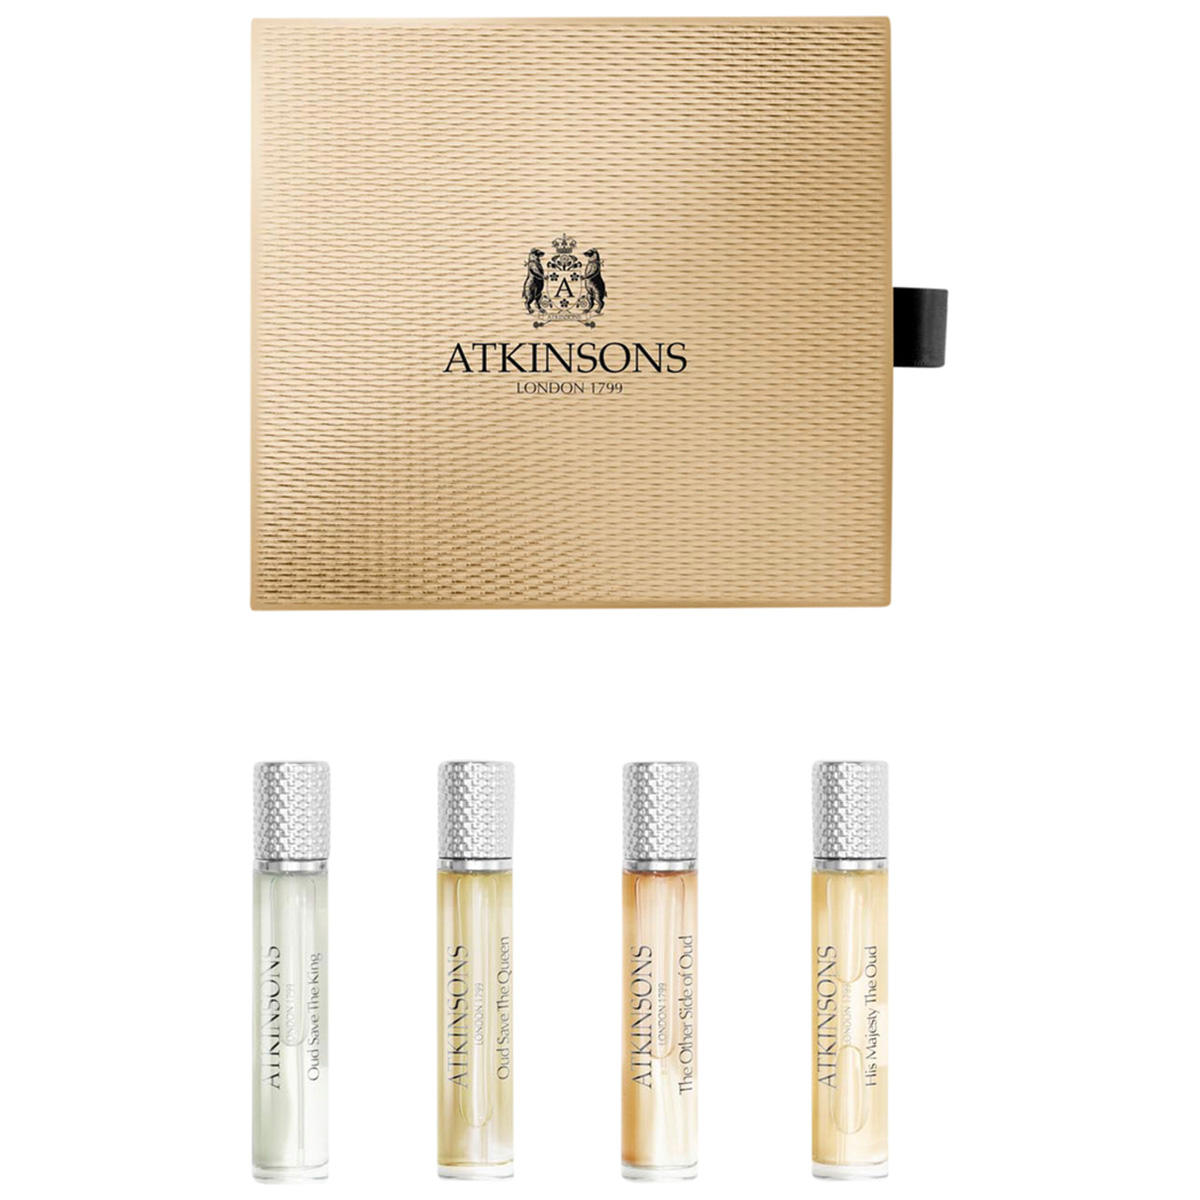 ATKINSONS Oud Travel Spray Set 4 x 10 ml - 2